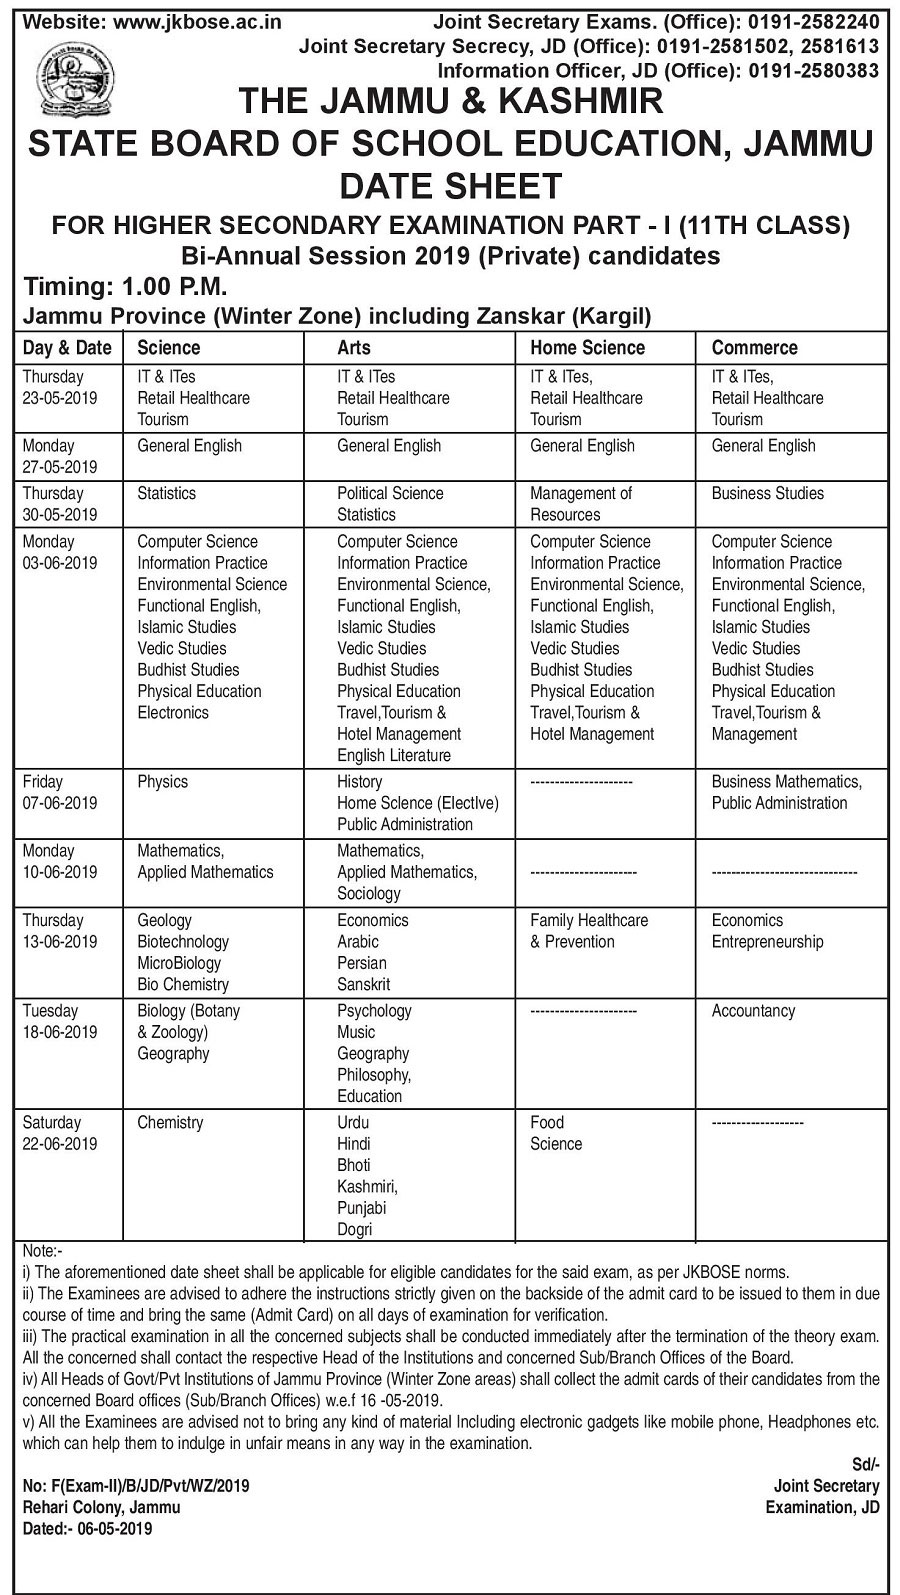 JKBOSE Date Sheet for Class 11th (Bi-Annual) Exam 2019 of Jammu Province